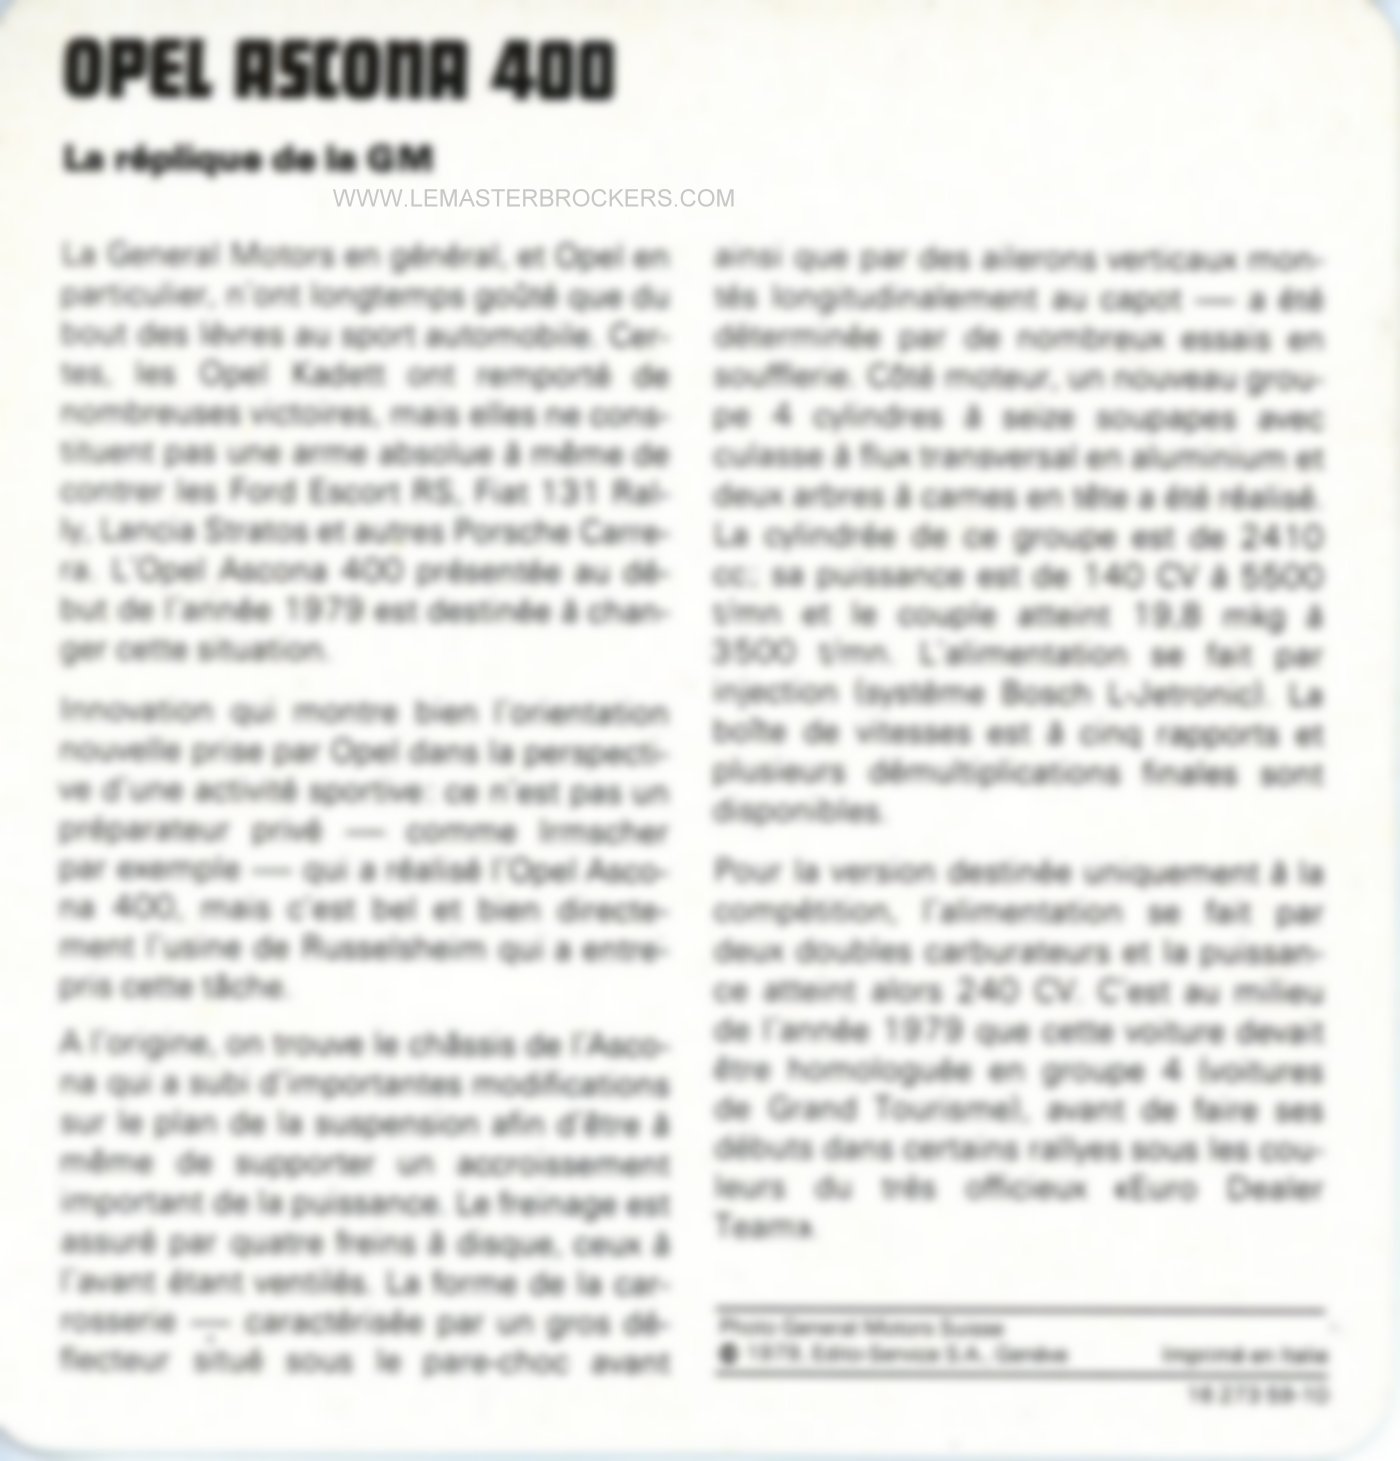 CARS-CARD-PICTURE-FICHE OPEL ASCONA 400-1979